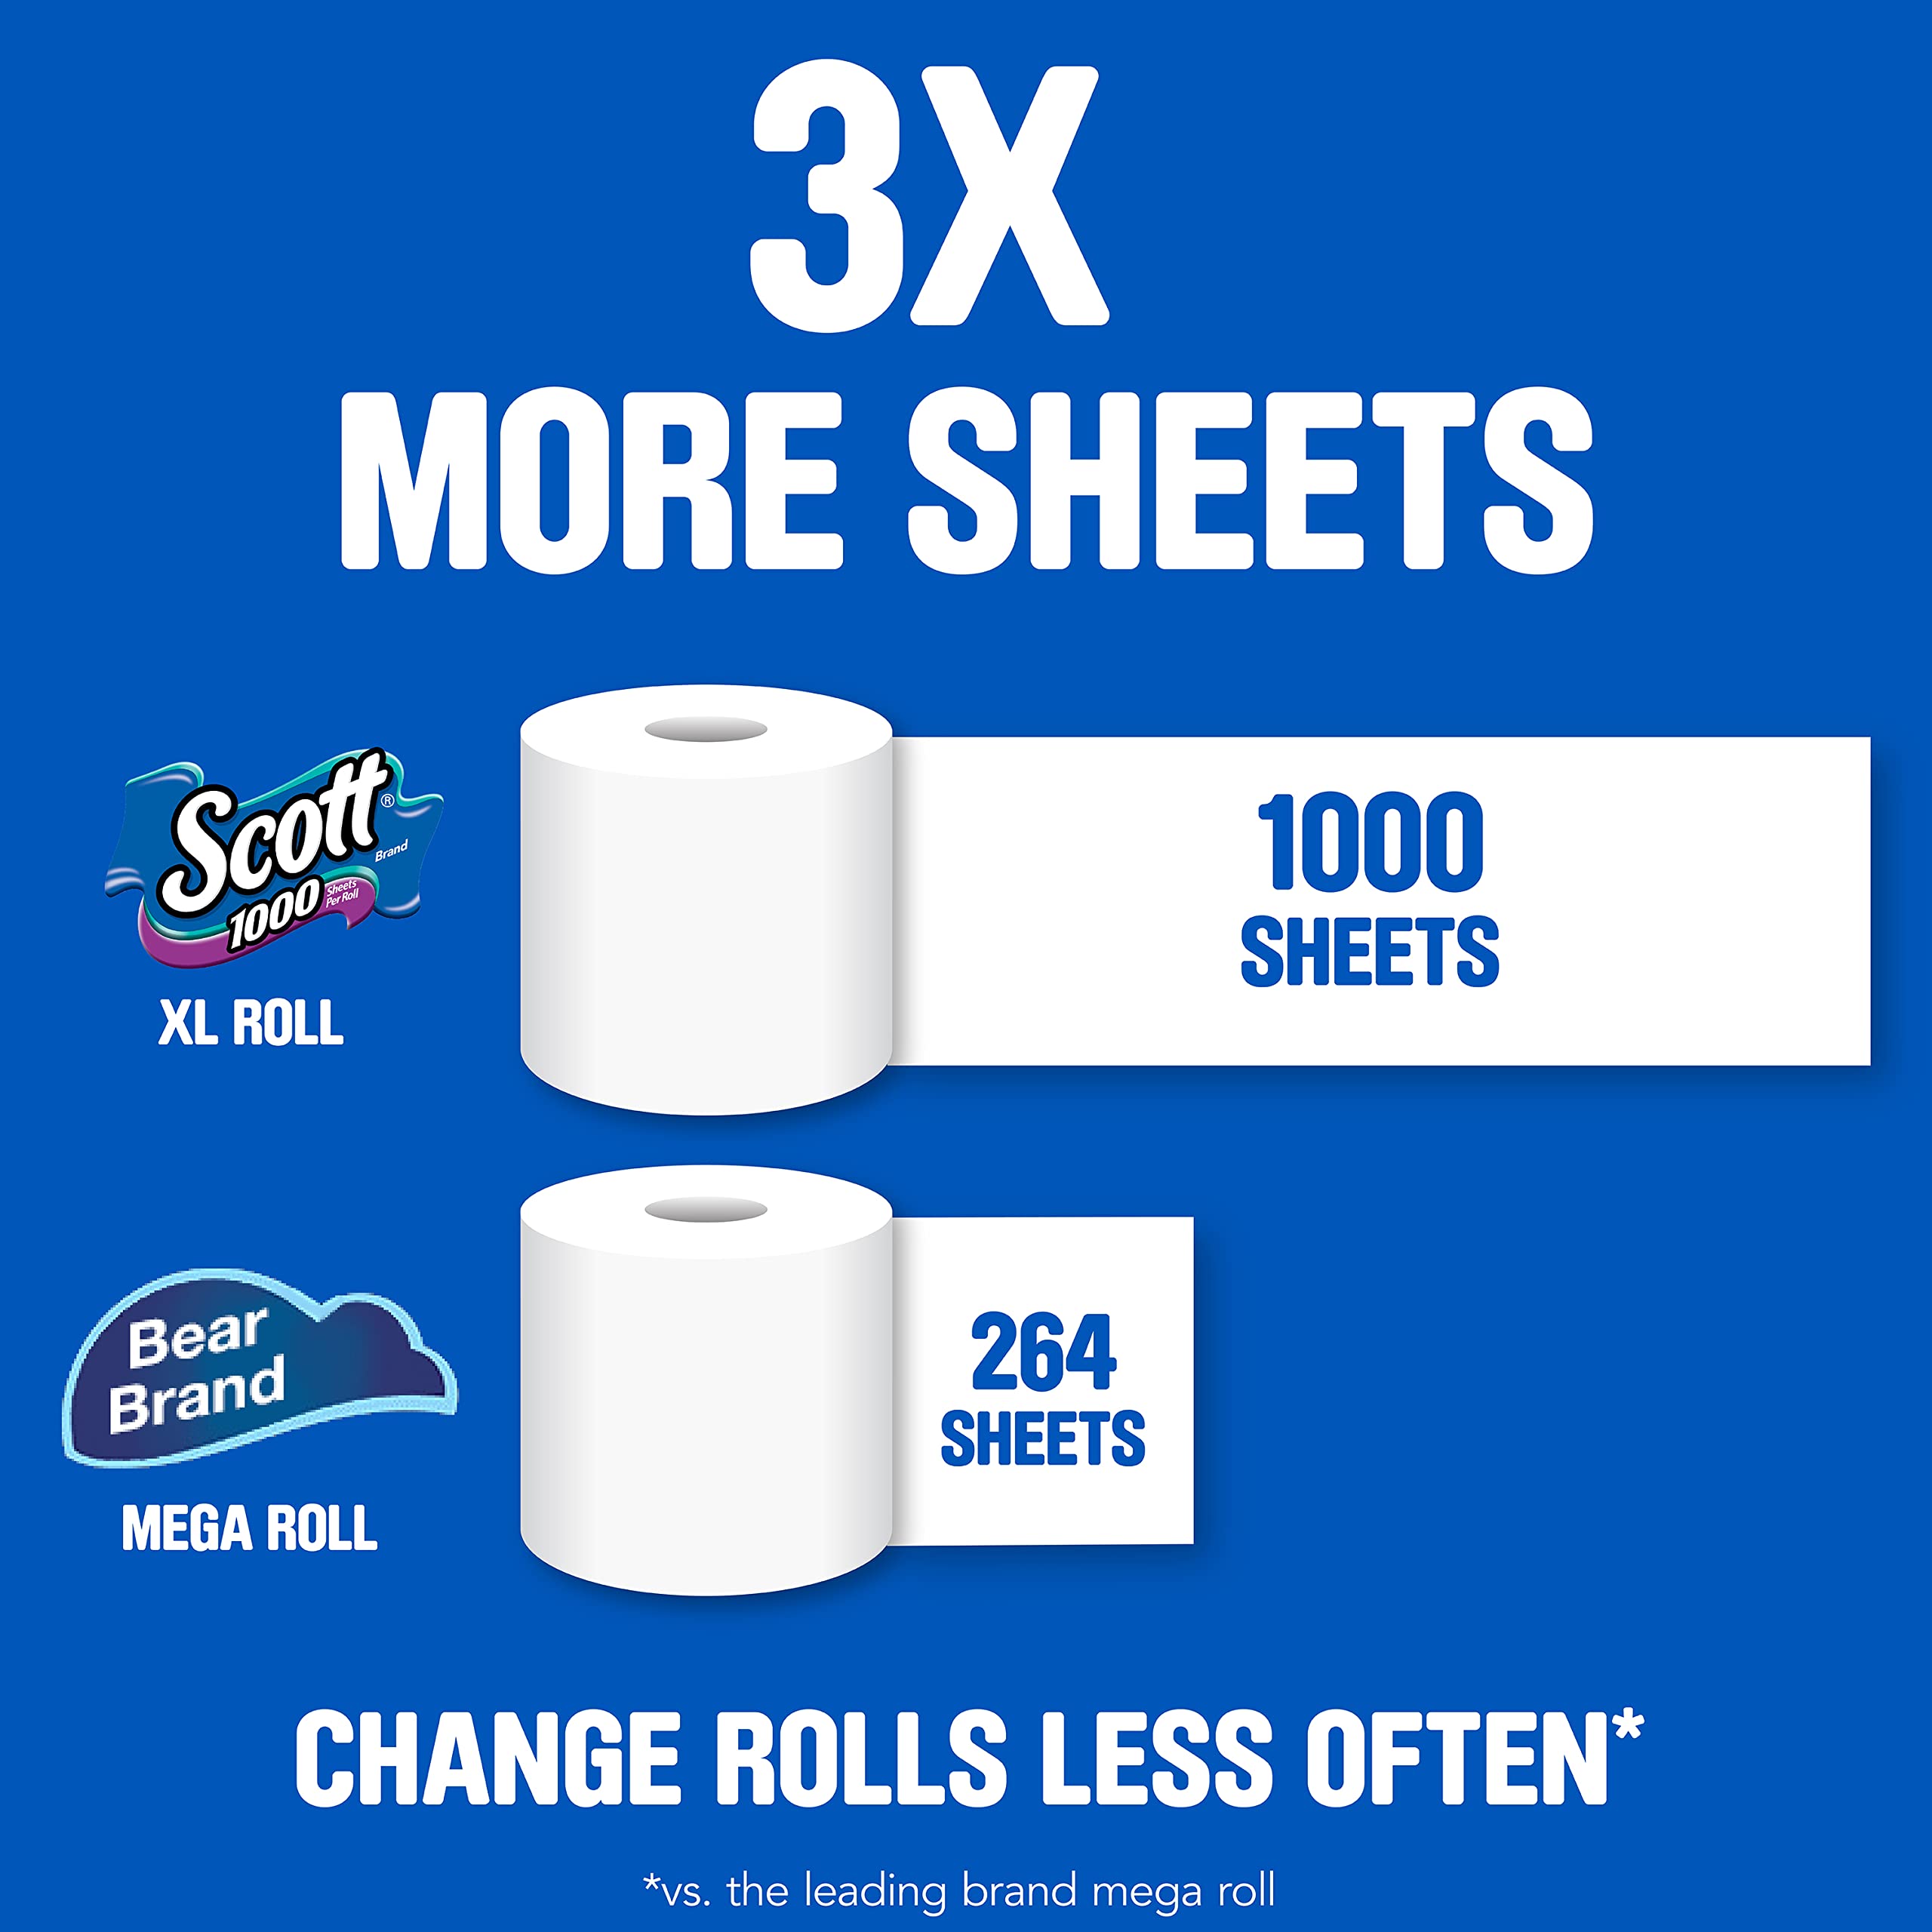 Scott Trusted Clean Toilet Paper, 32 Regular Rolls, Septic-Safe Toilet Tissue, 1-Ply Rolls